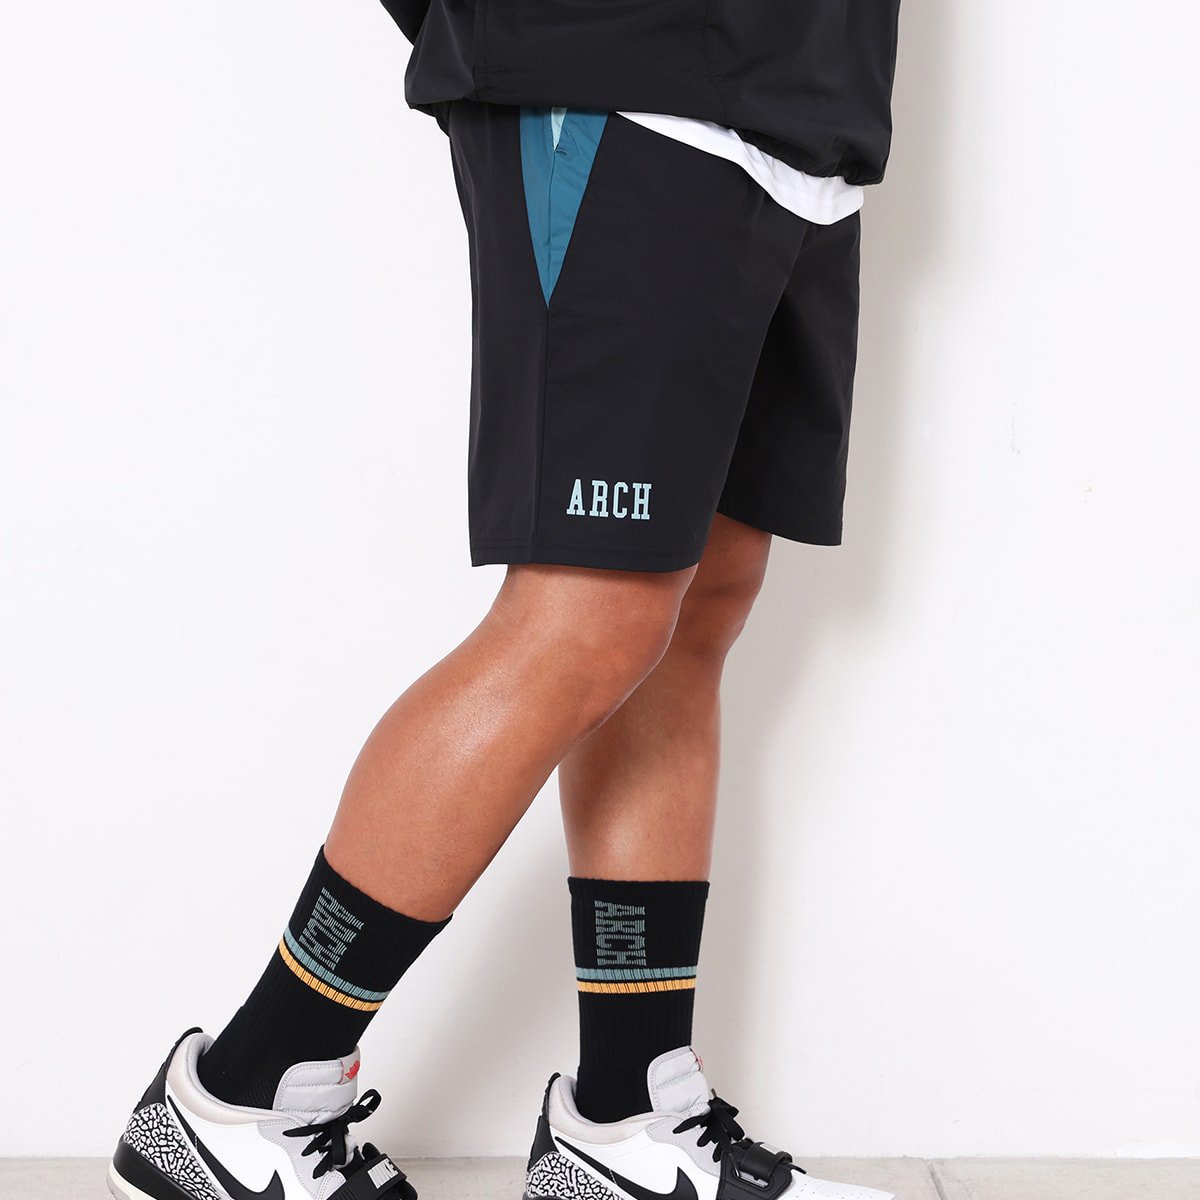 side colors shorts【black】 - Arch ☆ アーチ [バスケットボール 